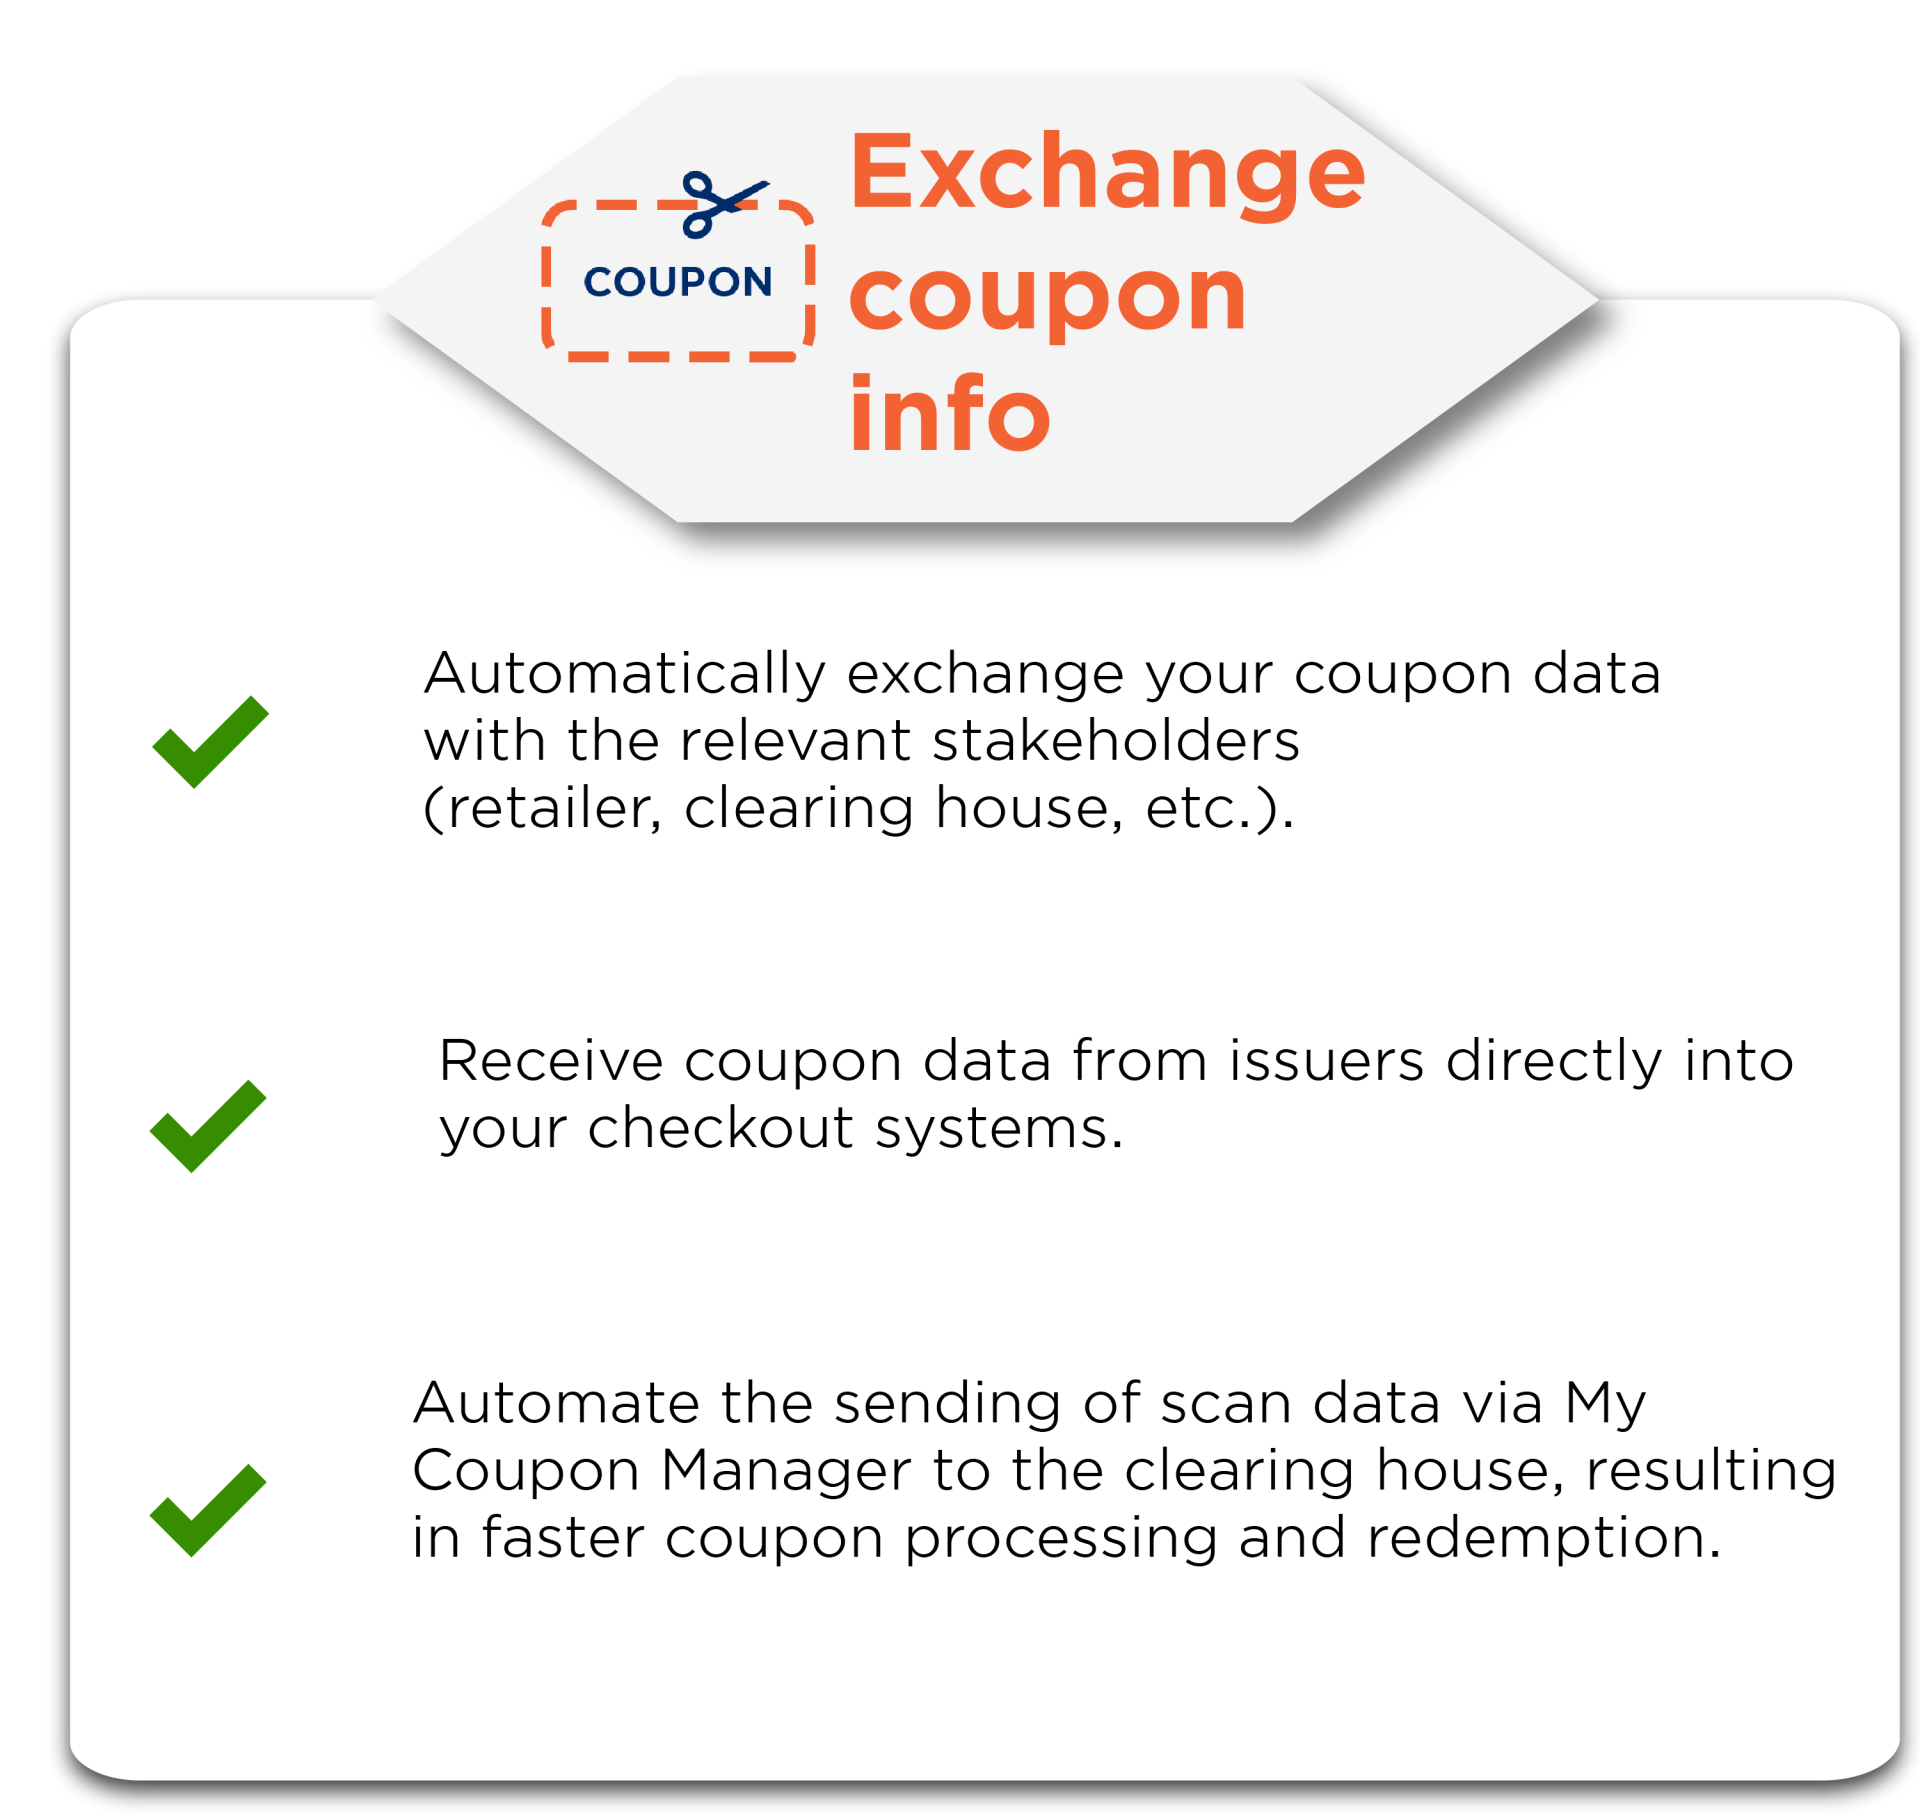 exchange coupon info